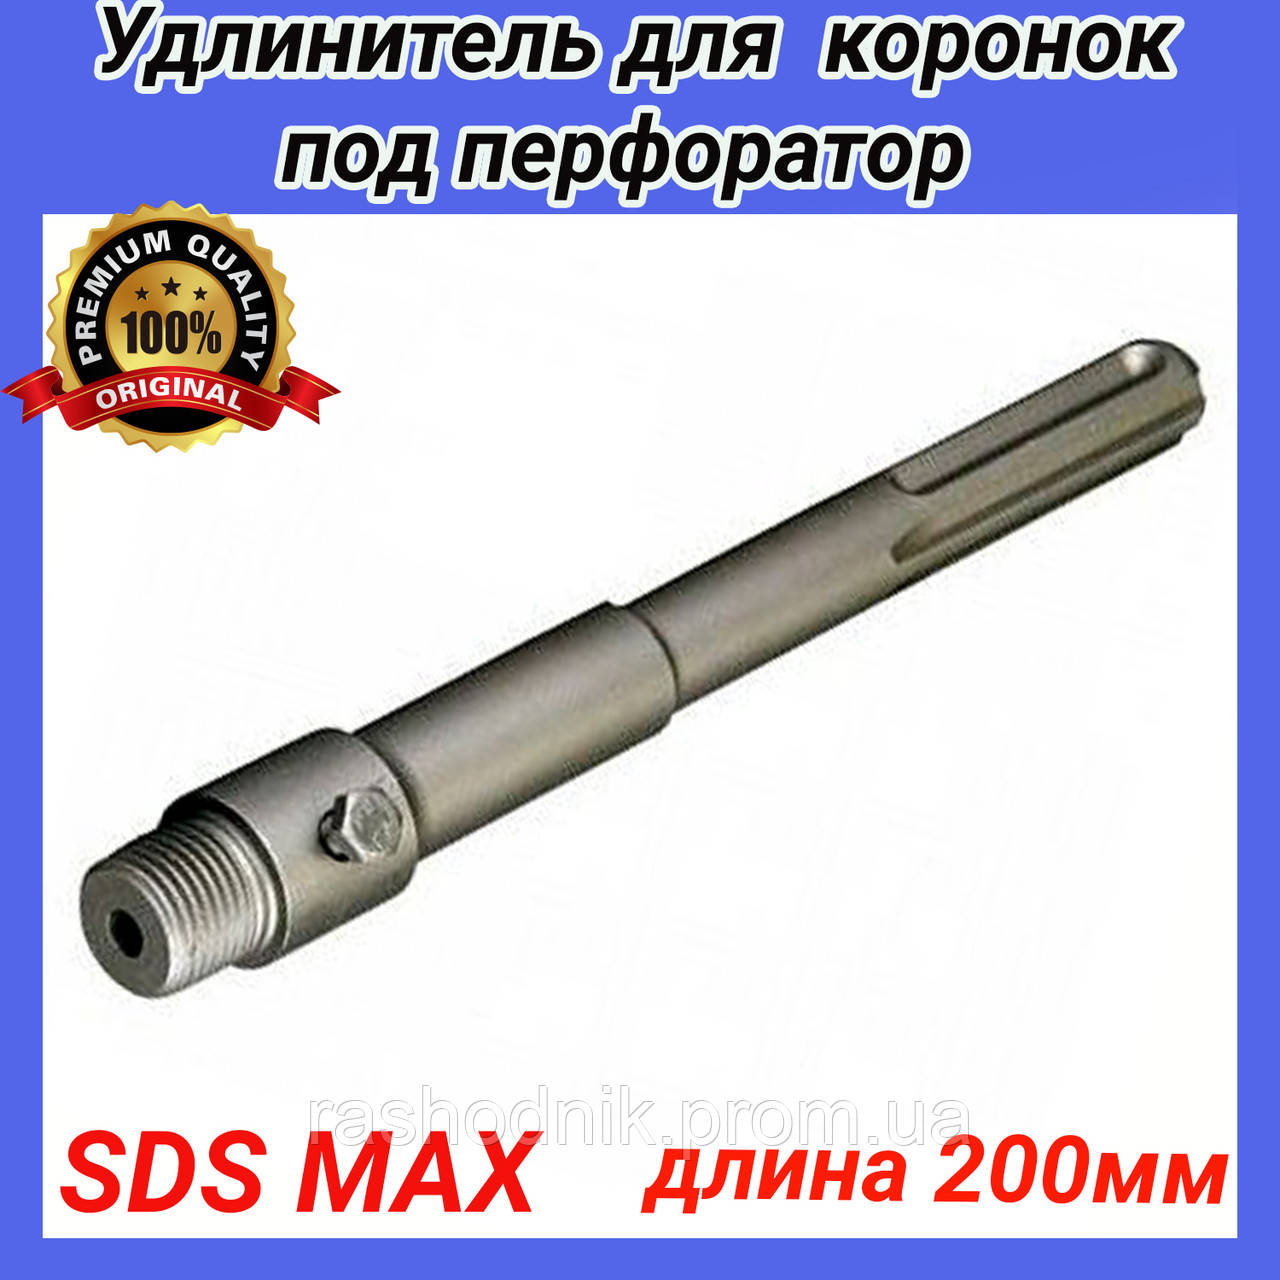 

Удлинитель хвостовик для коронок под перфоратор SDS-MAX длина 200мм резьба м22 S&T